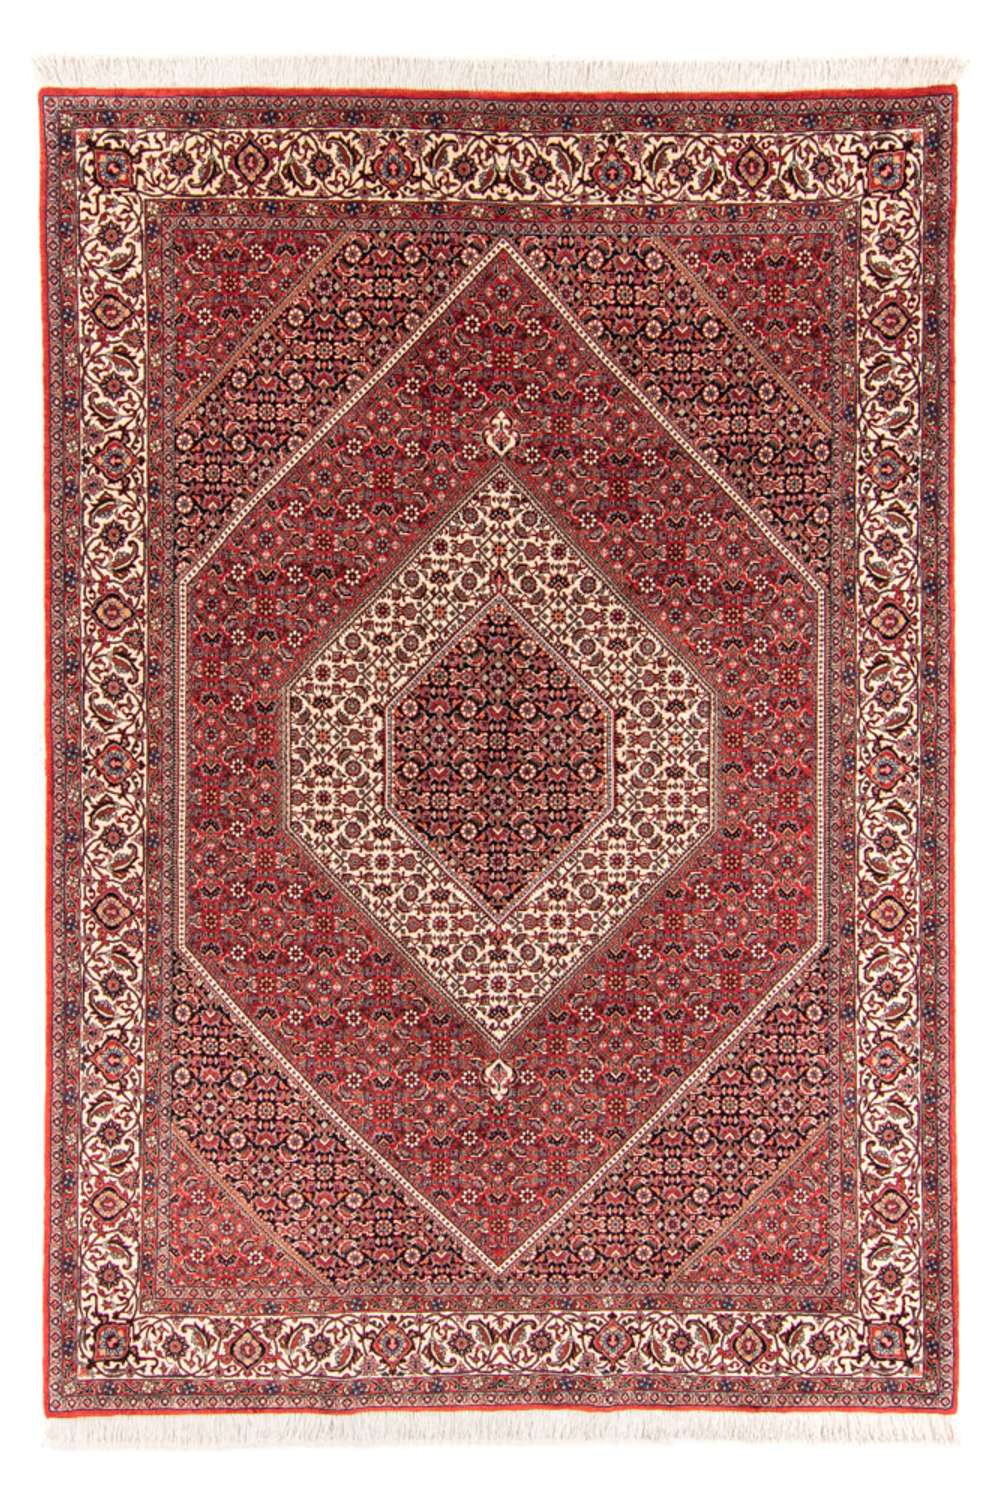 Tapis persan - Bidjar - 252 x 174 cm - rouge